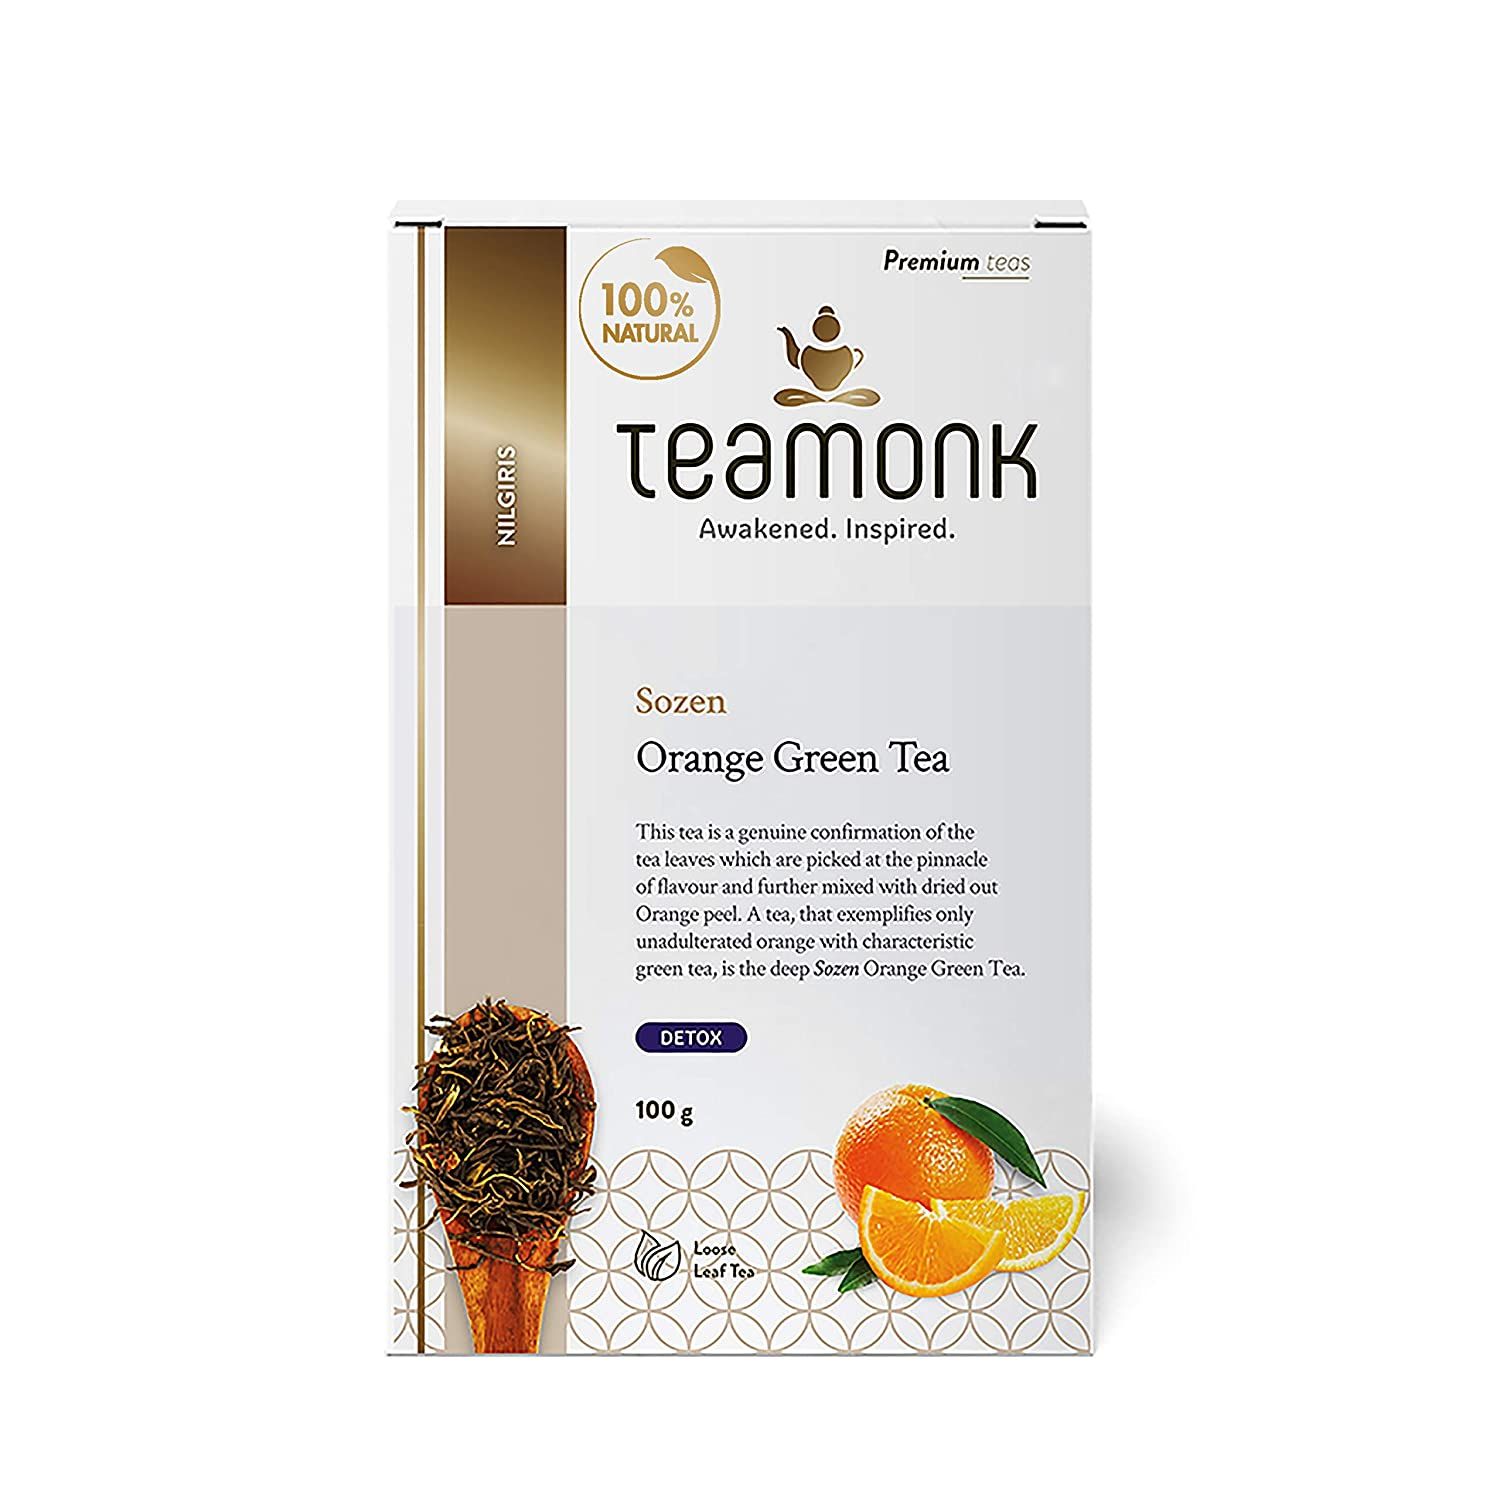 Teamonk Orange Green Tea Image